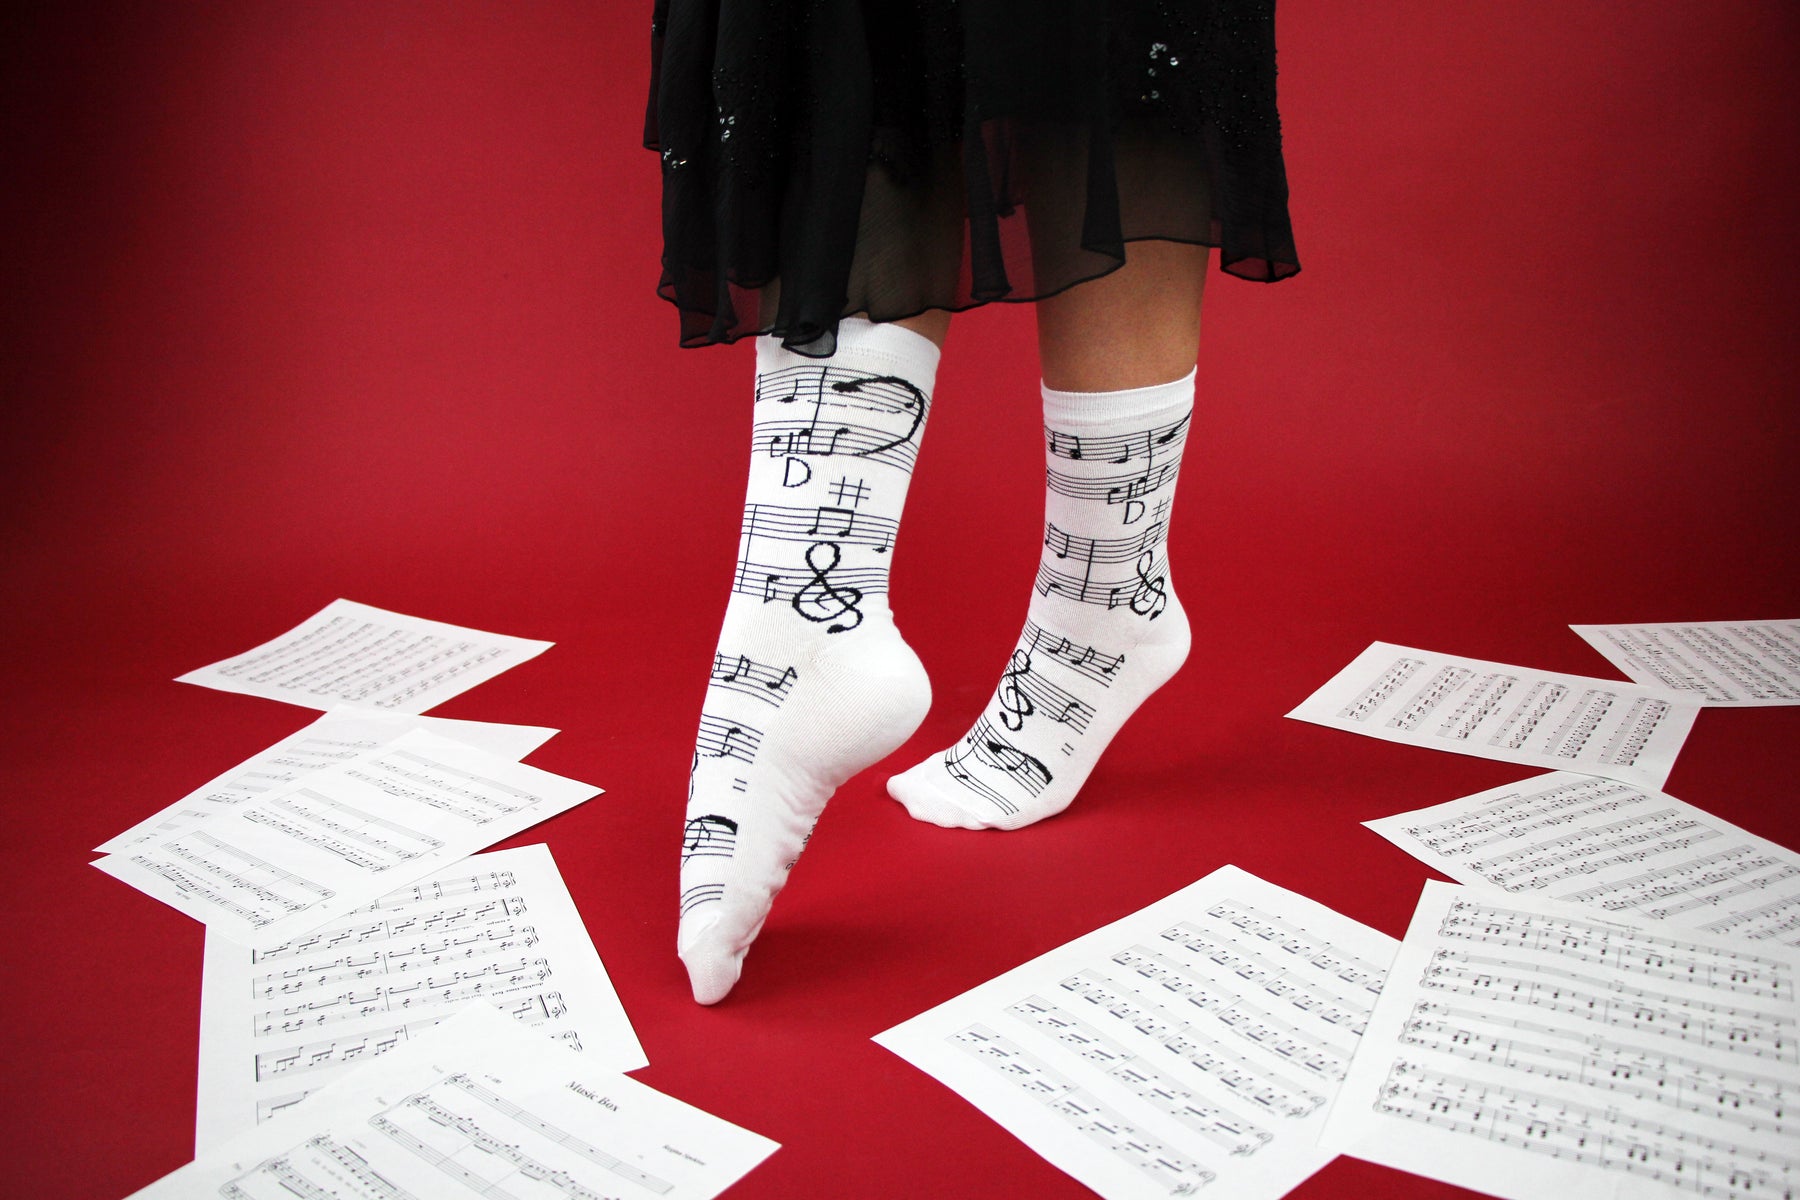 Socks: Music Note Women's